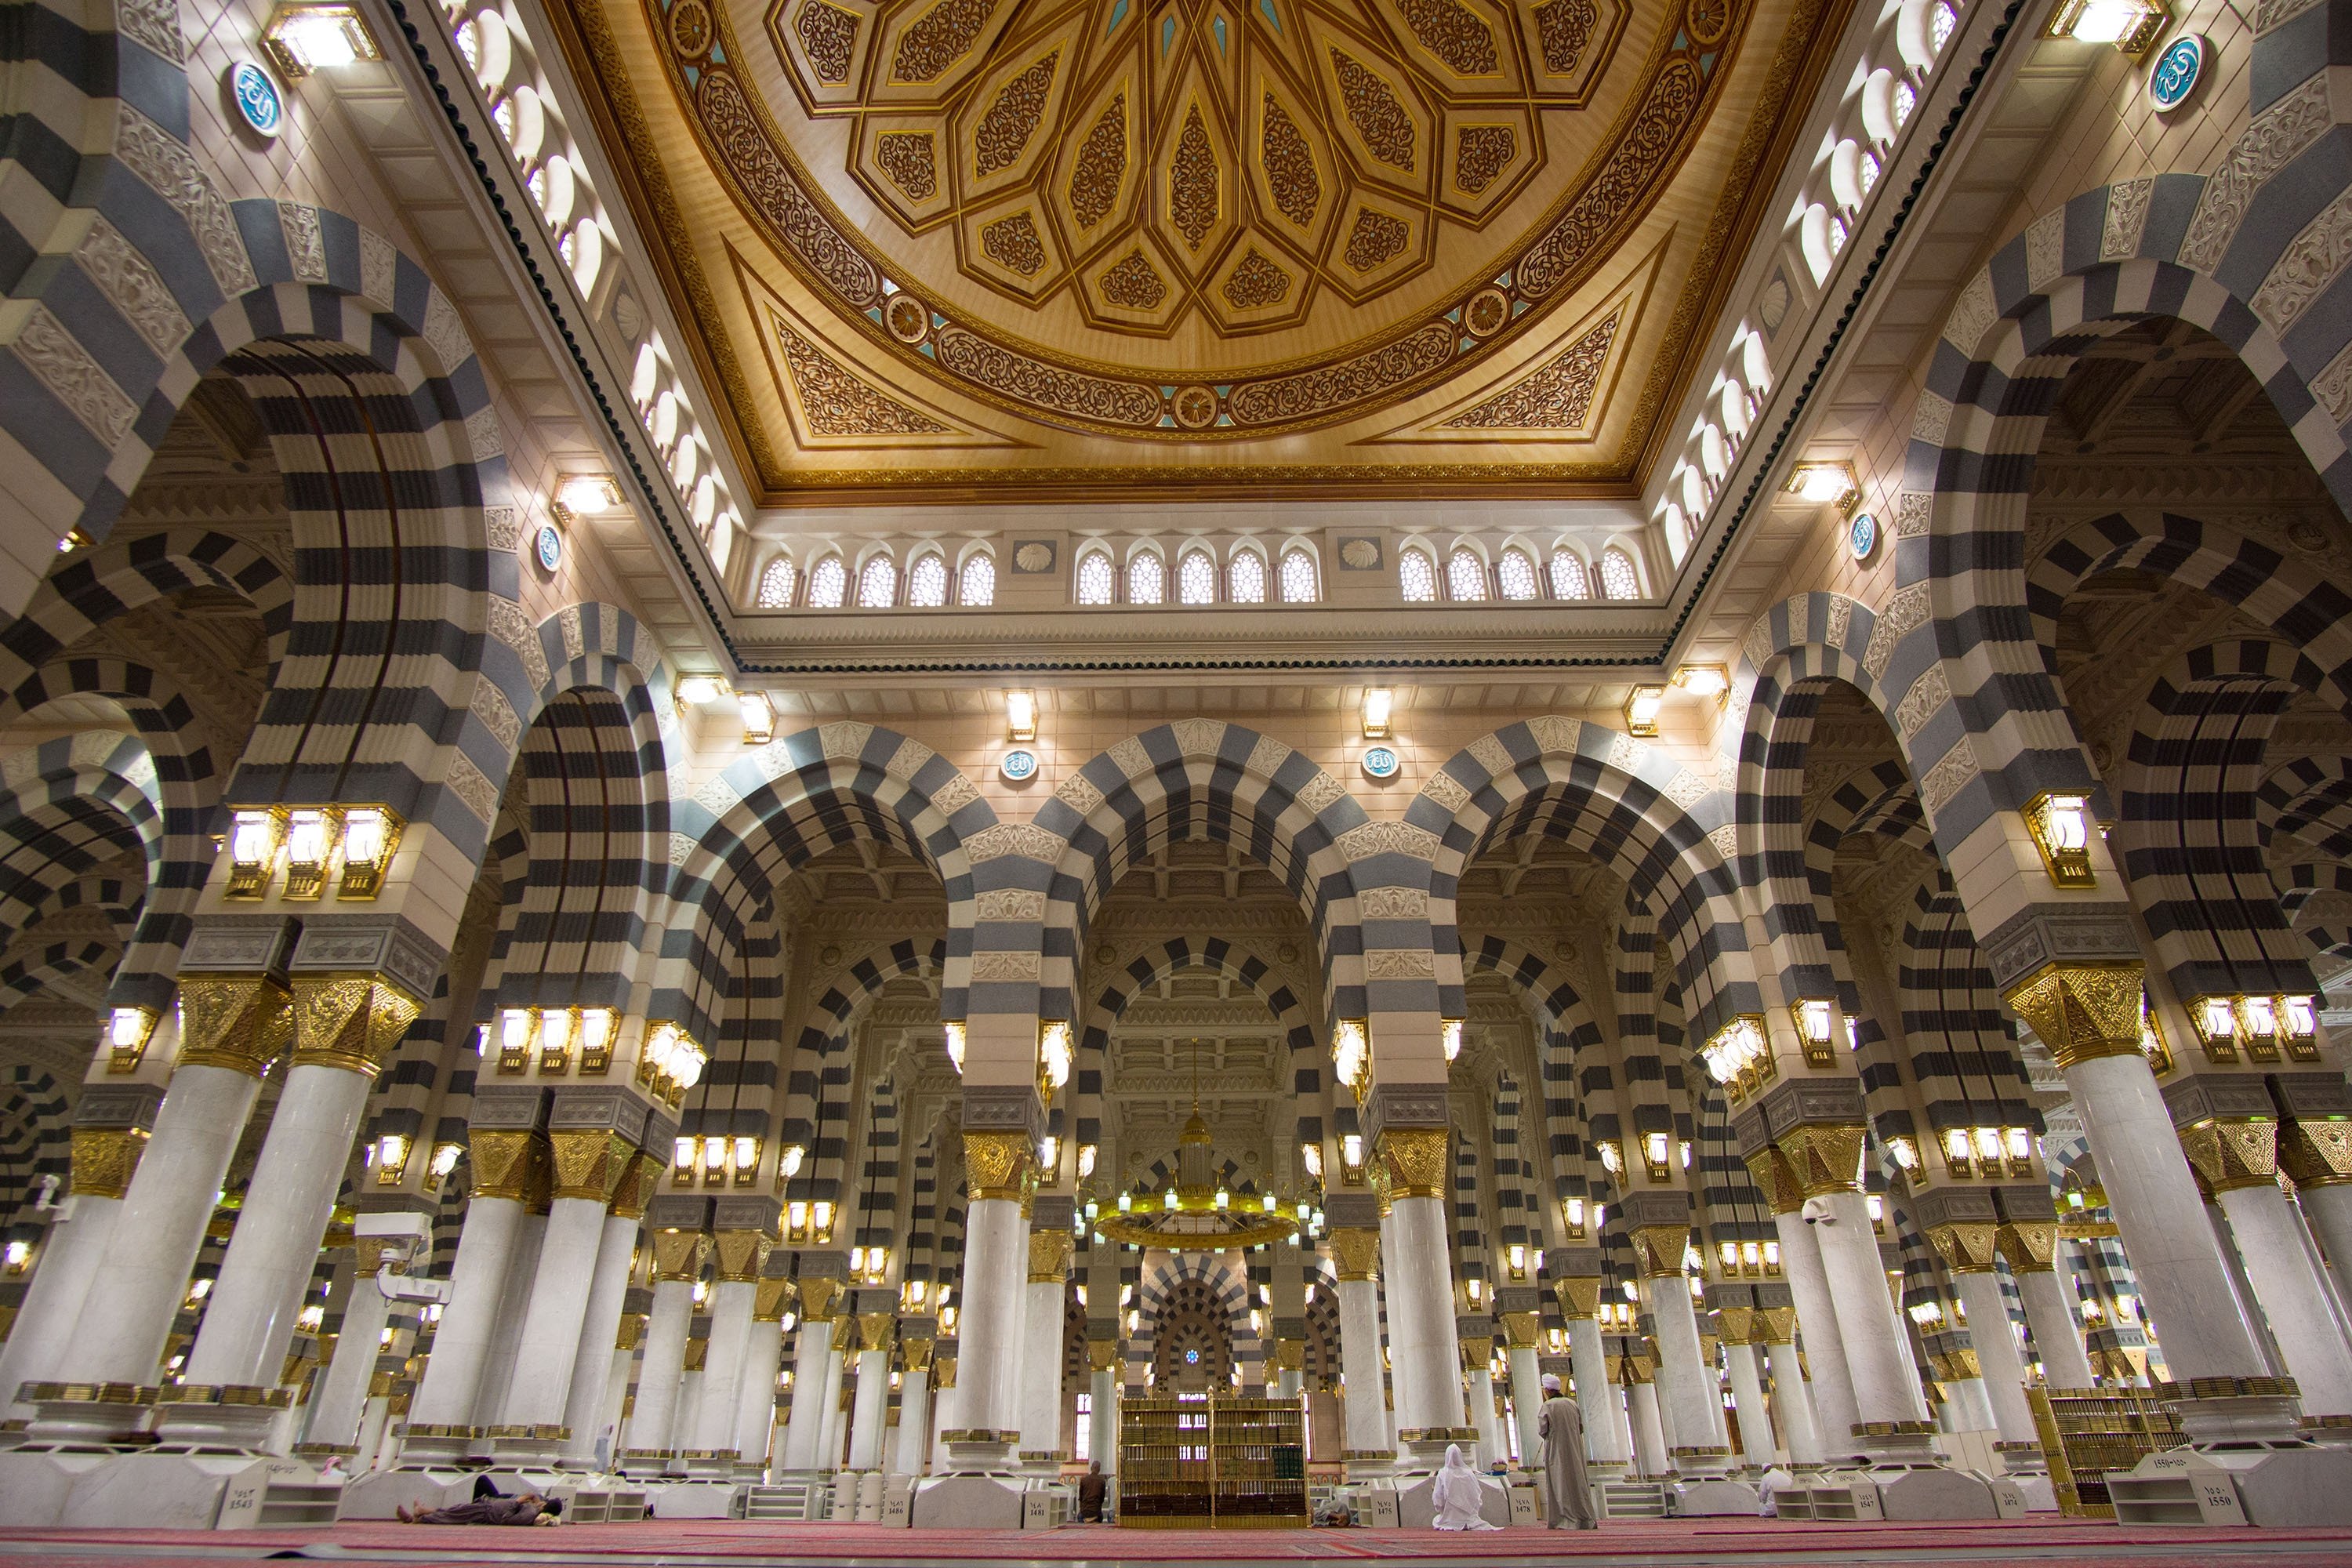 The interior of the Al-Masjid al-Nabawi (Mosque of the Prophet) where the tomb of the Prophet Muhammad is also located, in Medina, Saudi Arabia, April 19, 2016. (Shutterstock Photo)